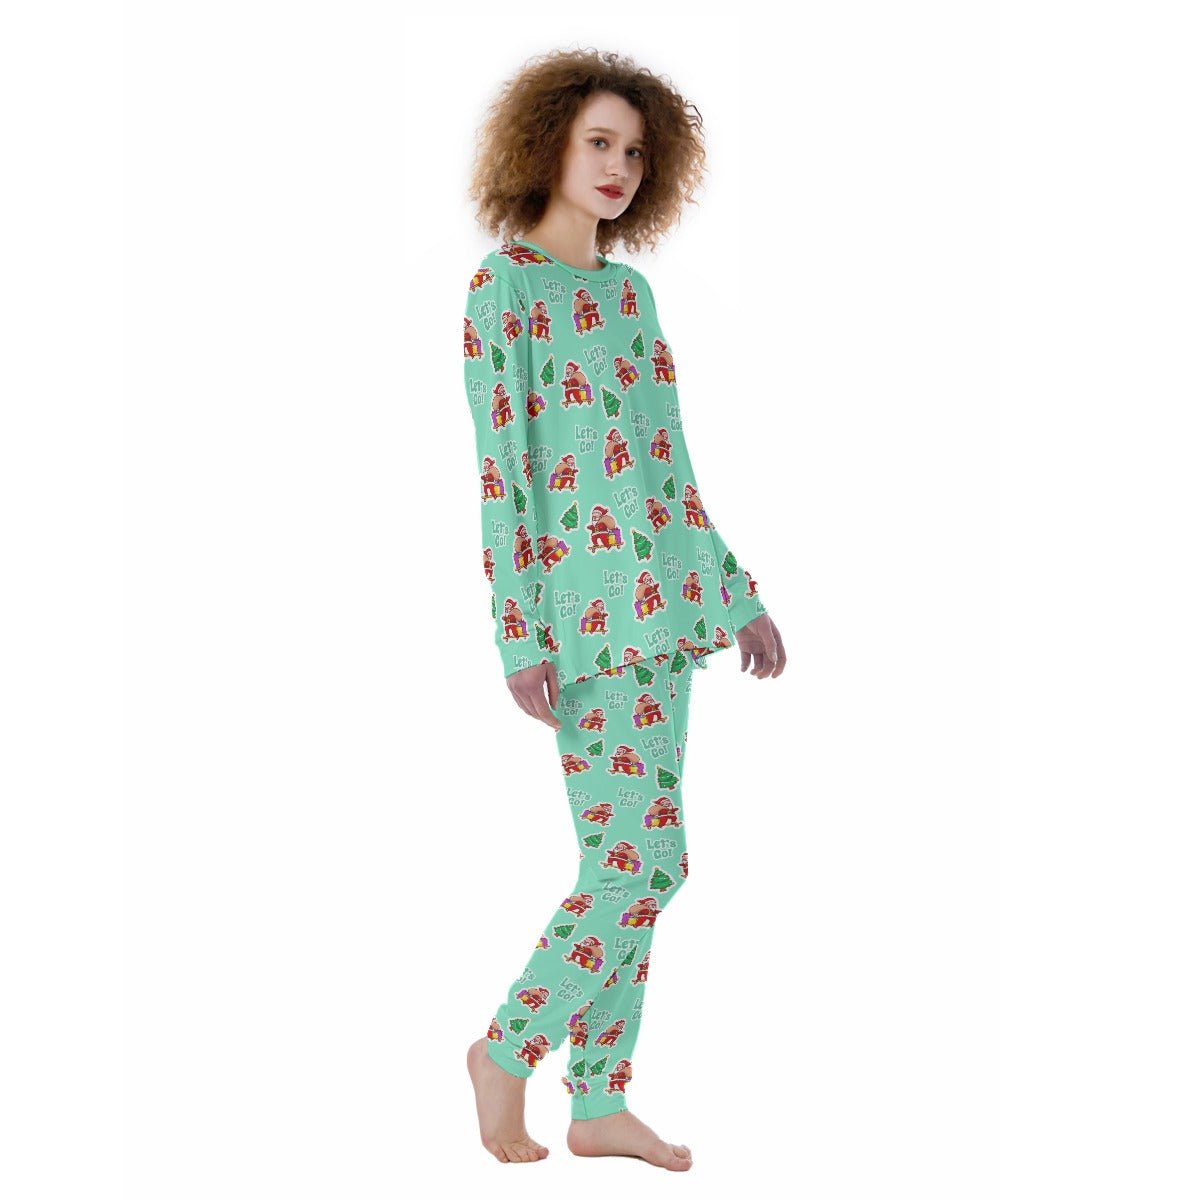 Women's Christmas Pyjamas - Green "Let's Go!" - Festive Style